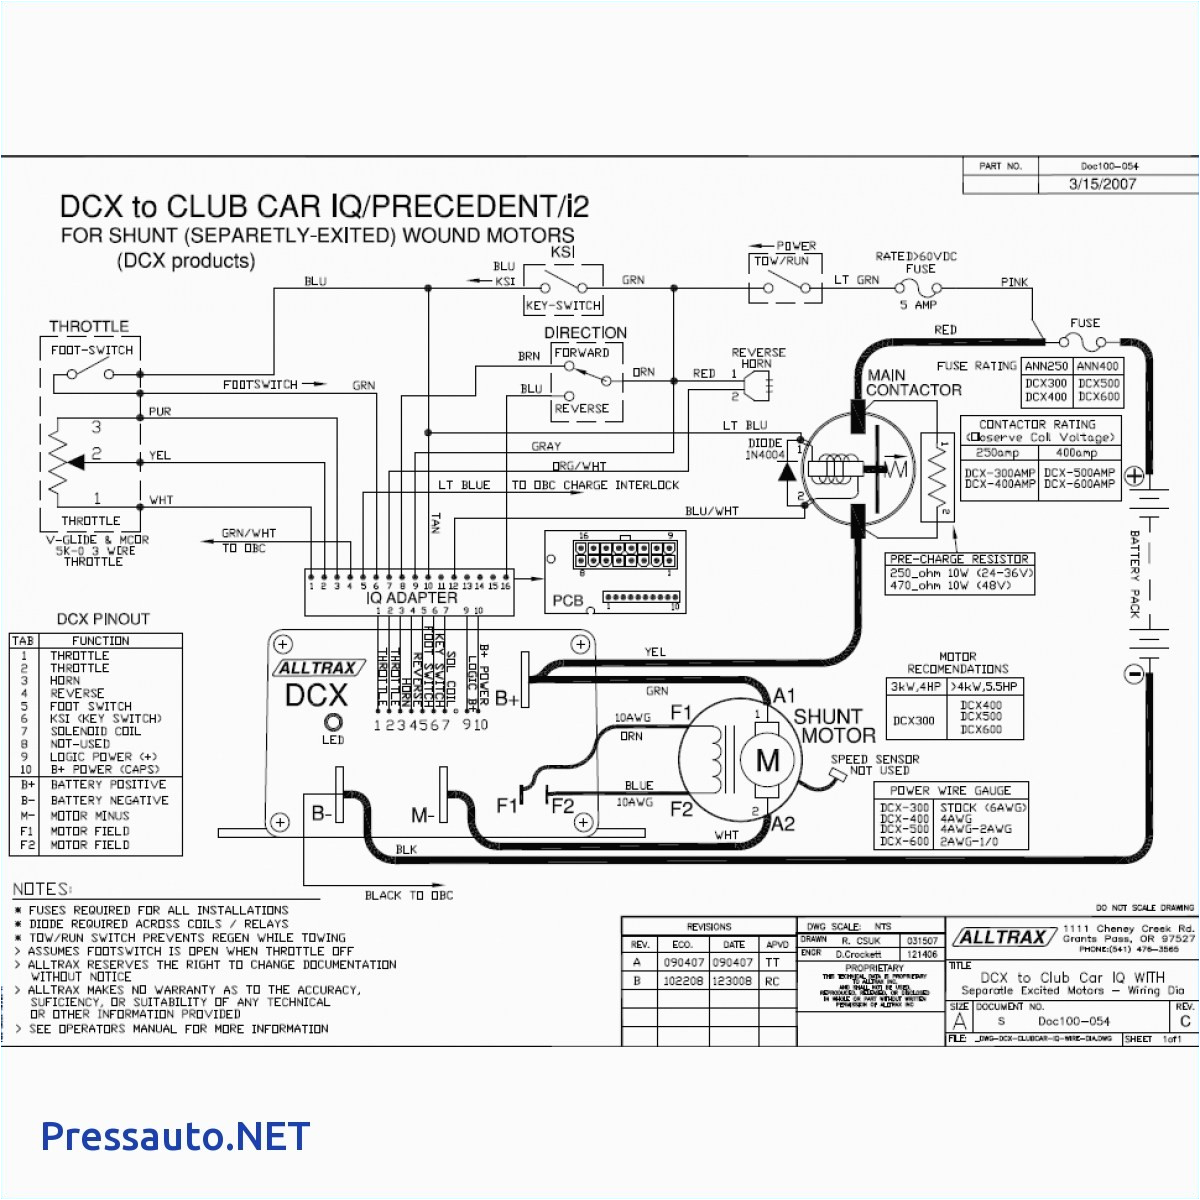 2001 ez go wiring diagram blog wiring diagram 2001 ez go txt wire diagram with controller